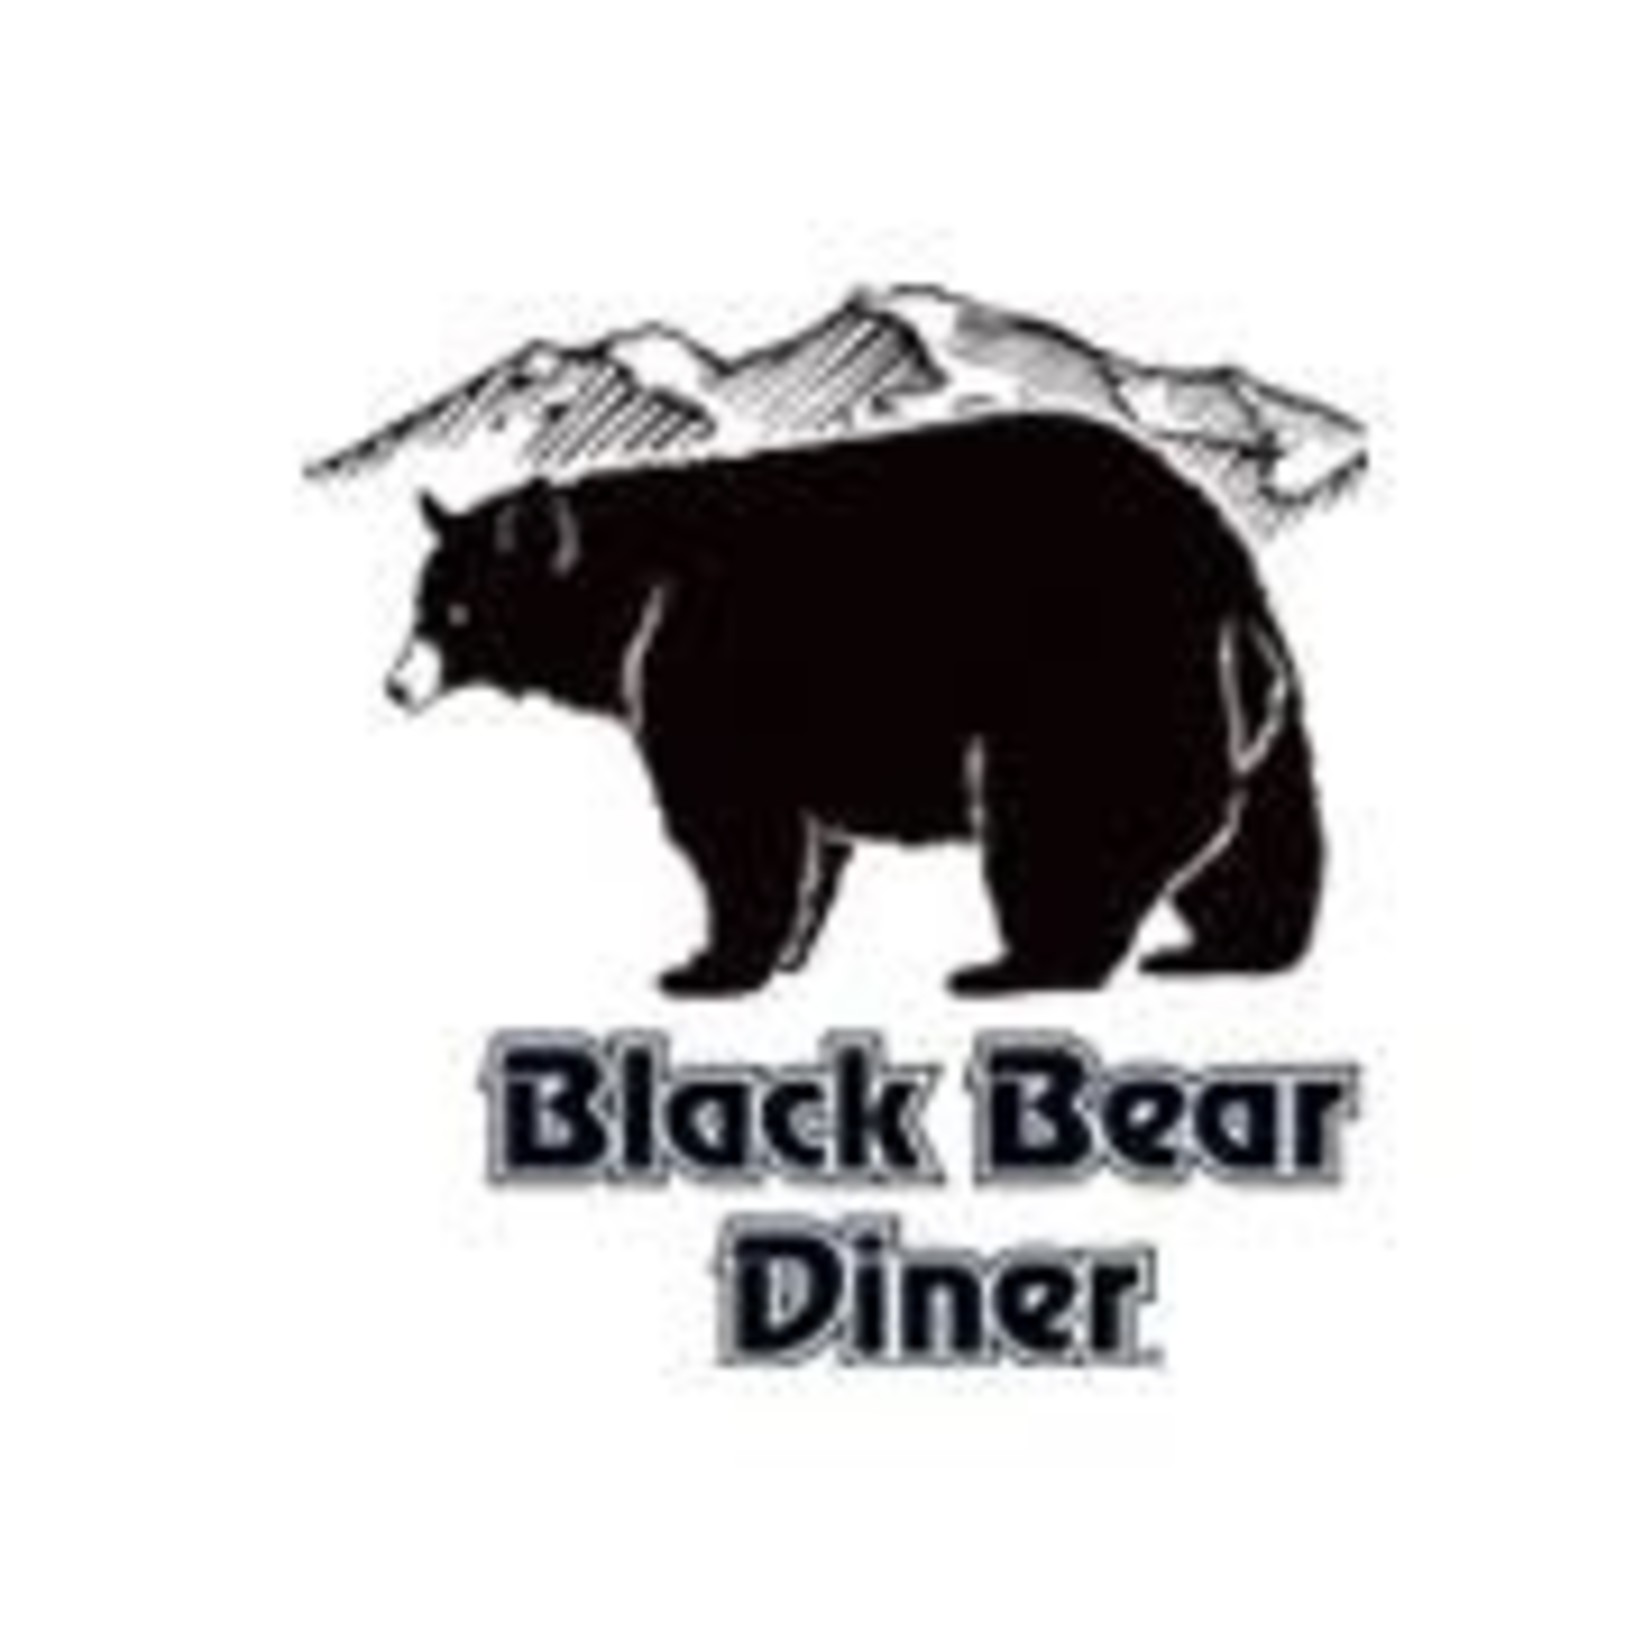 black bear diner locations near me